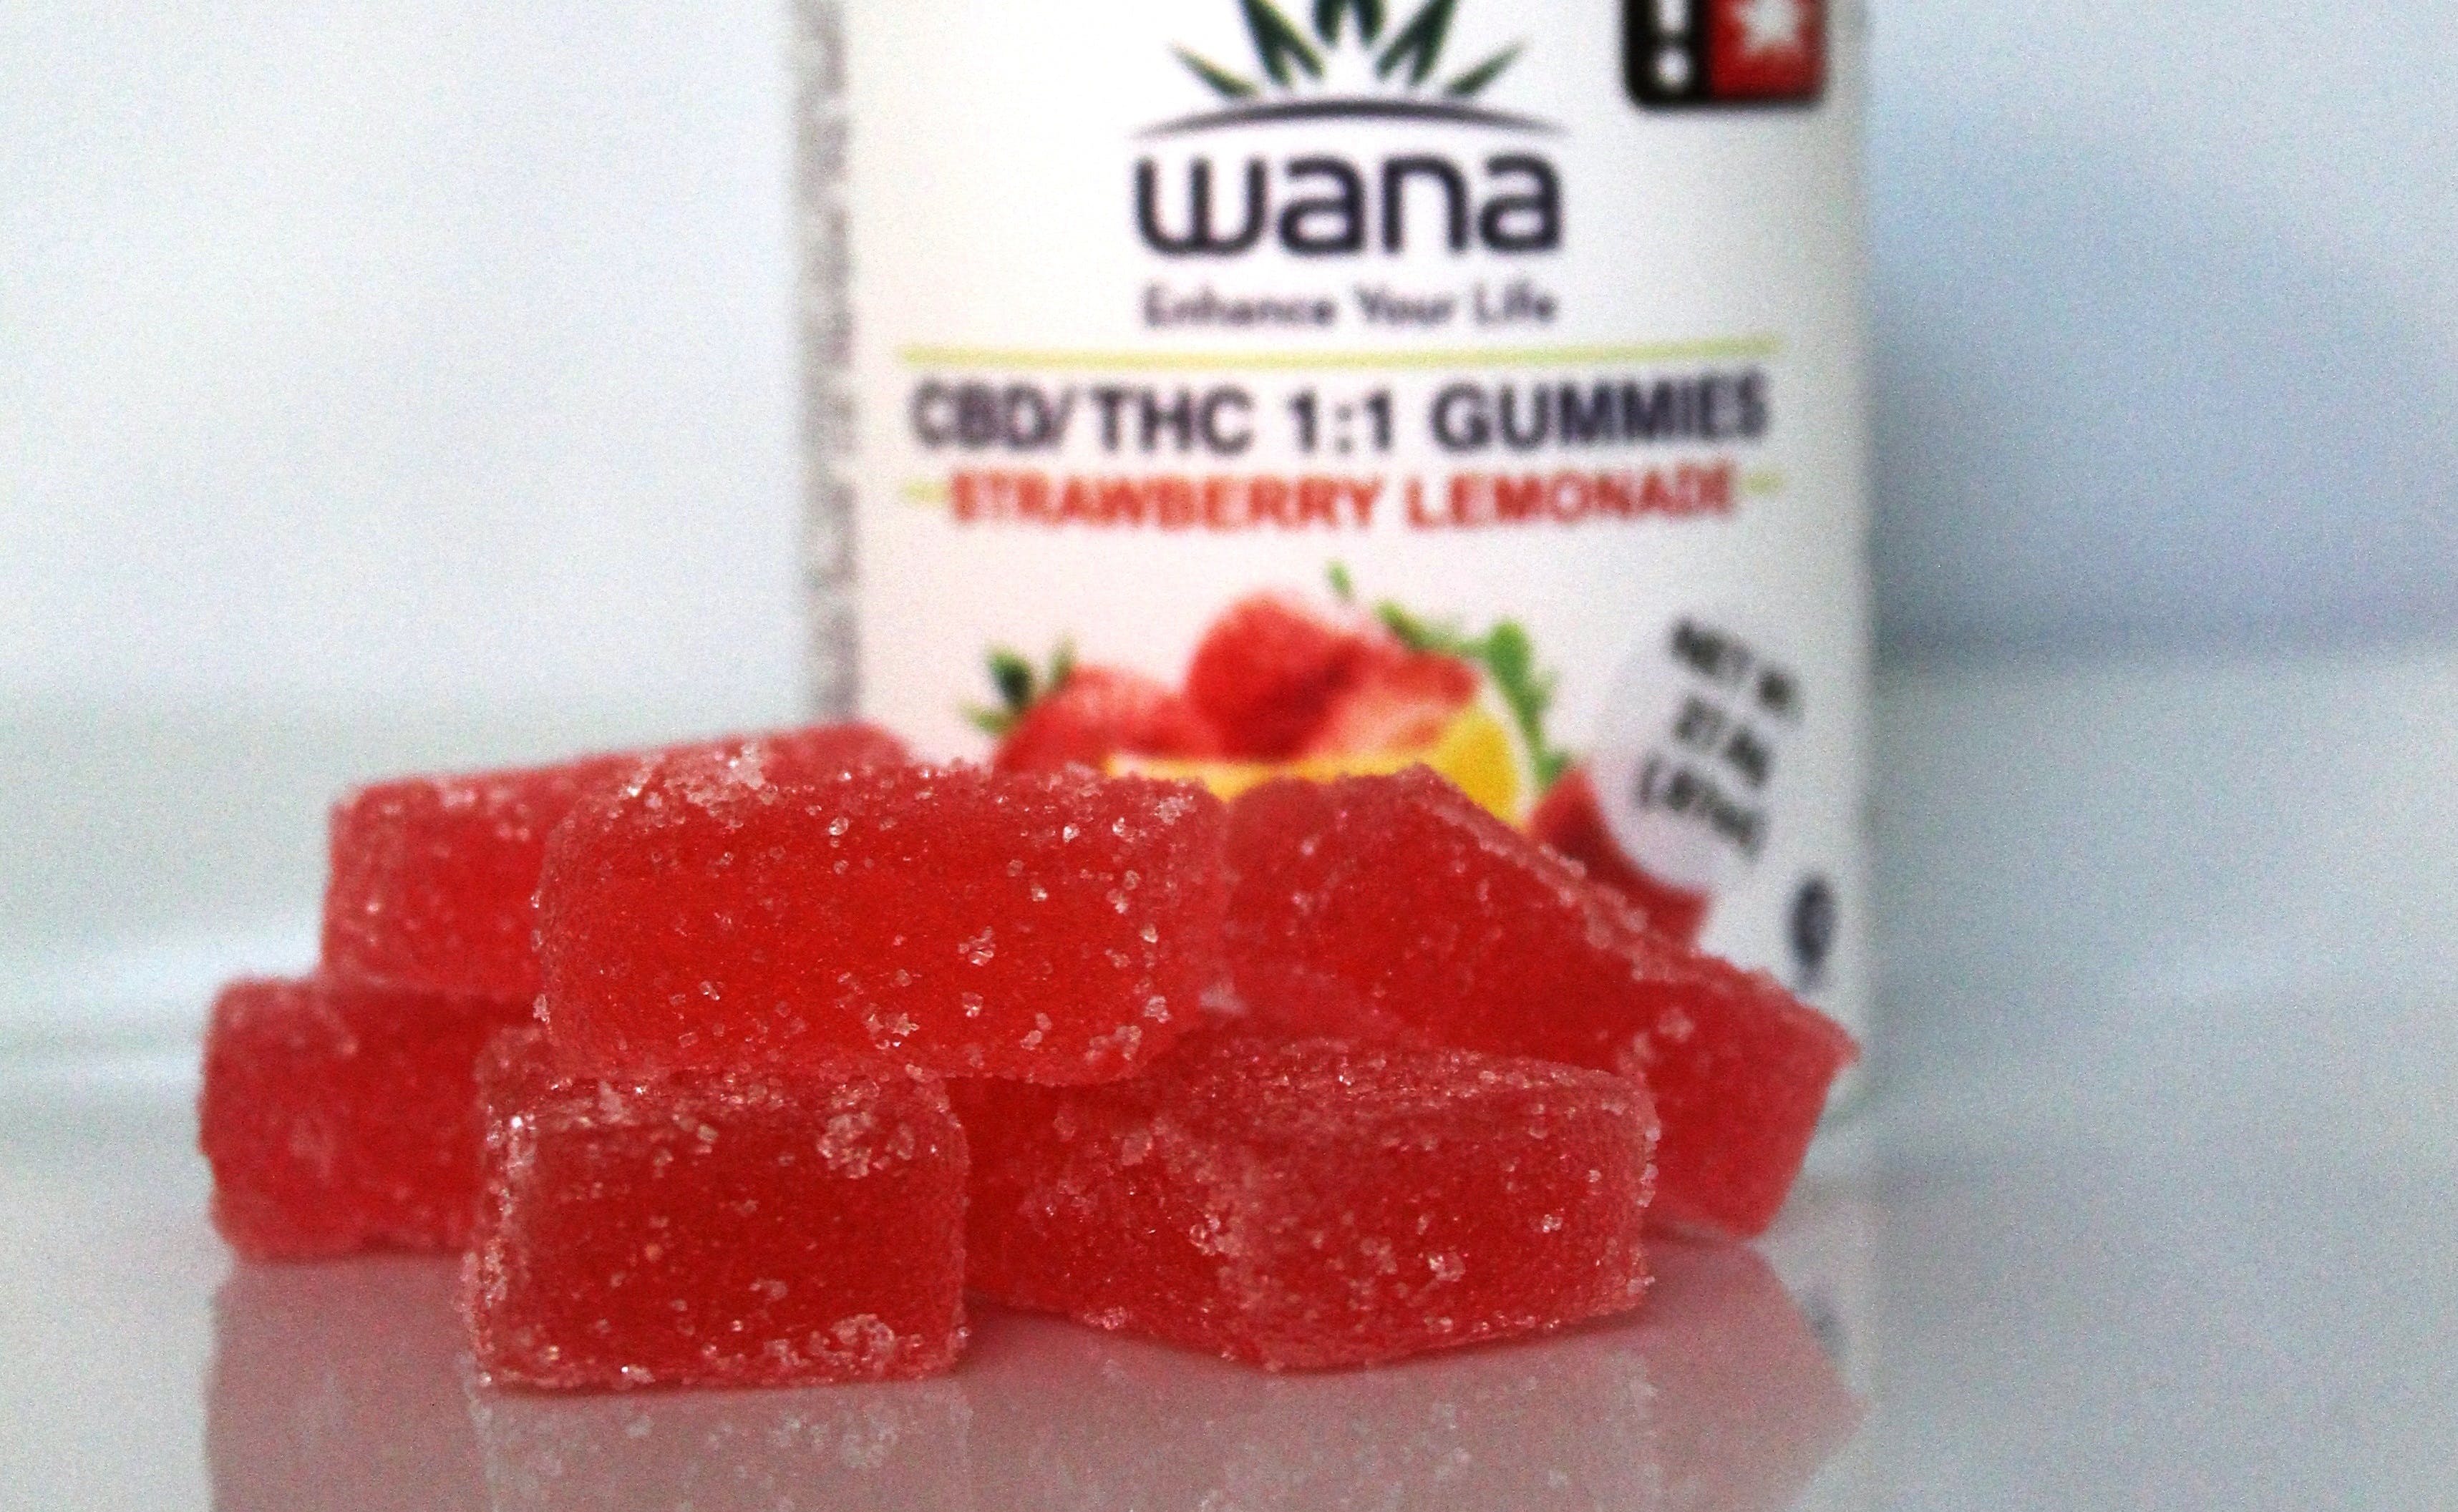 edible-strawberry-lemonade-11-gummies-49-2mg-thc-50mg-cbd-wana